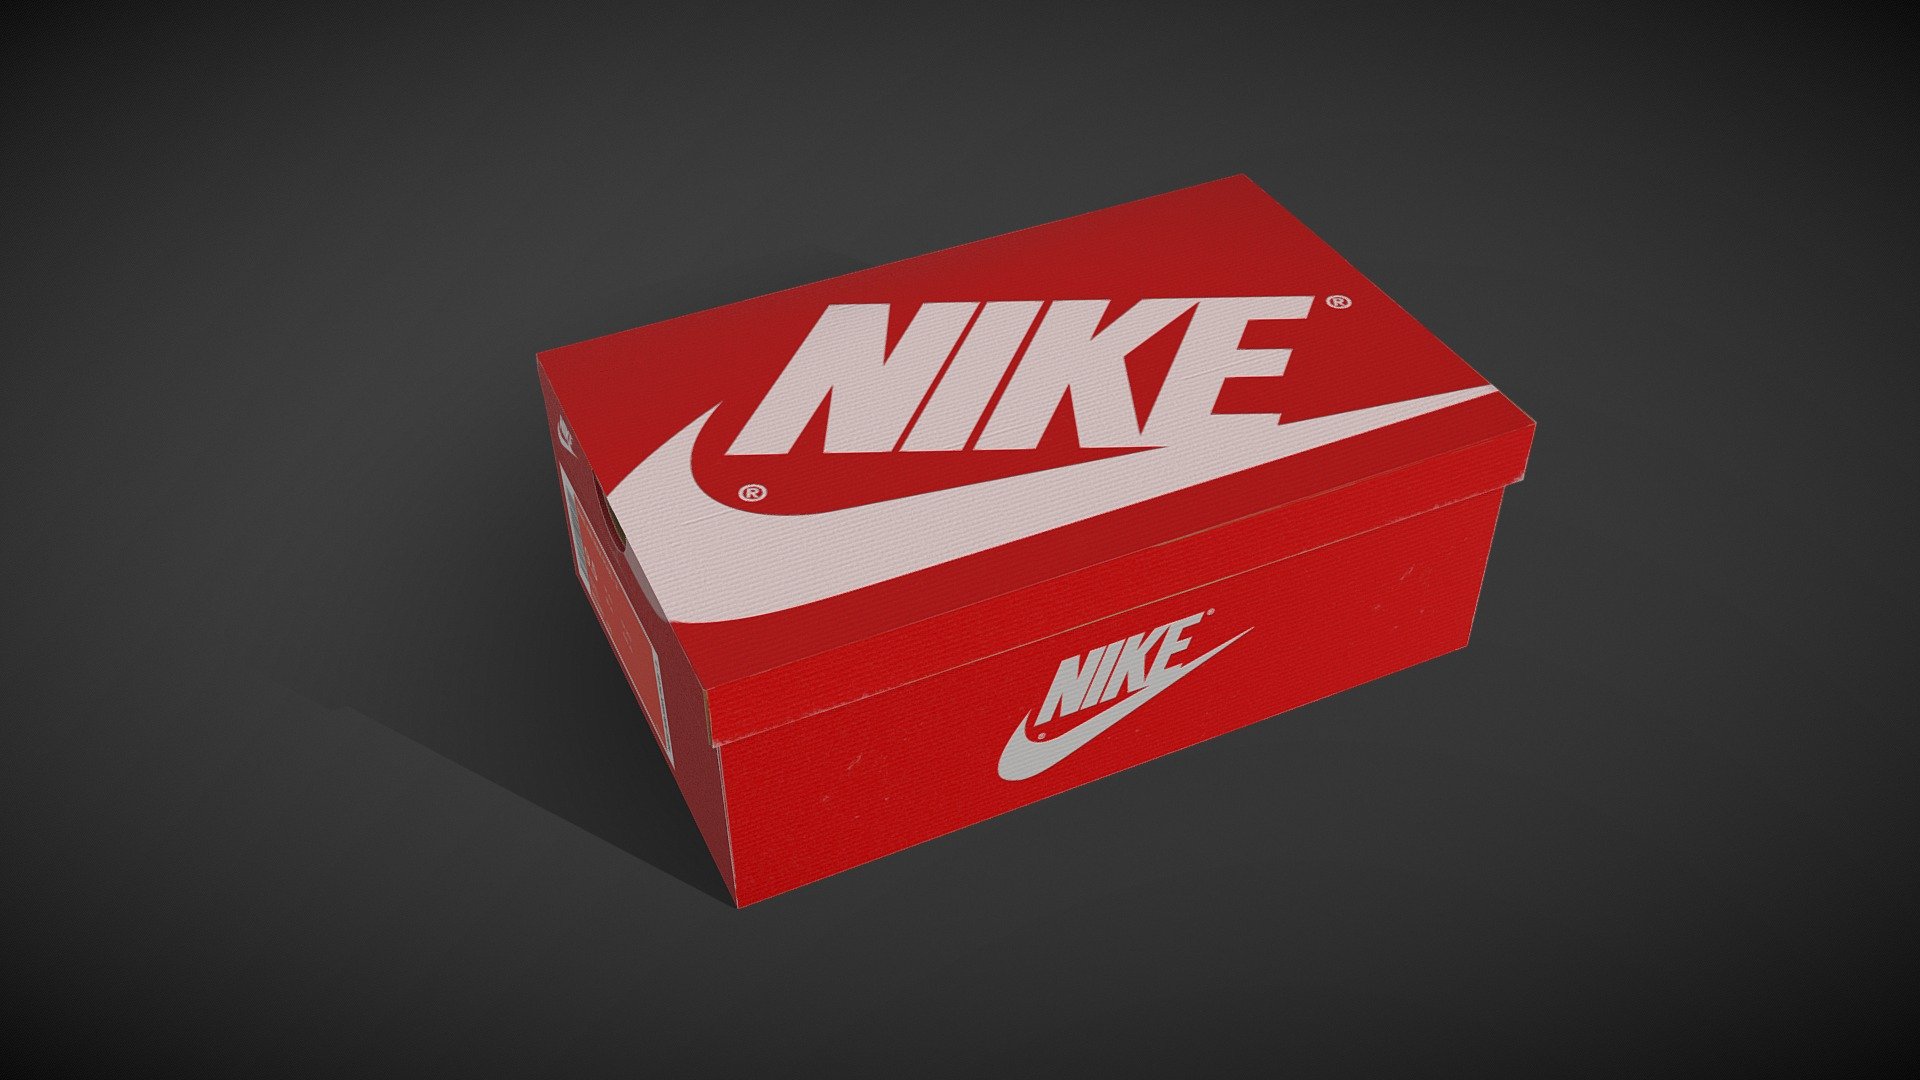 Nike Shoe Box
Made with Blender =) - Nike Shoe Box - Download Free 3D model by samplemem 3d model